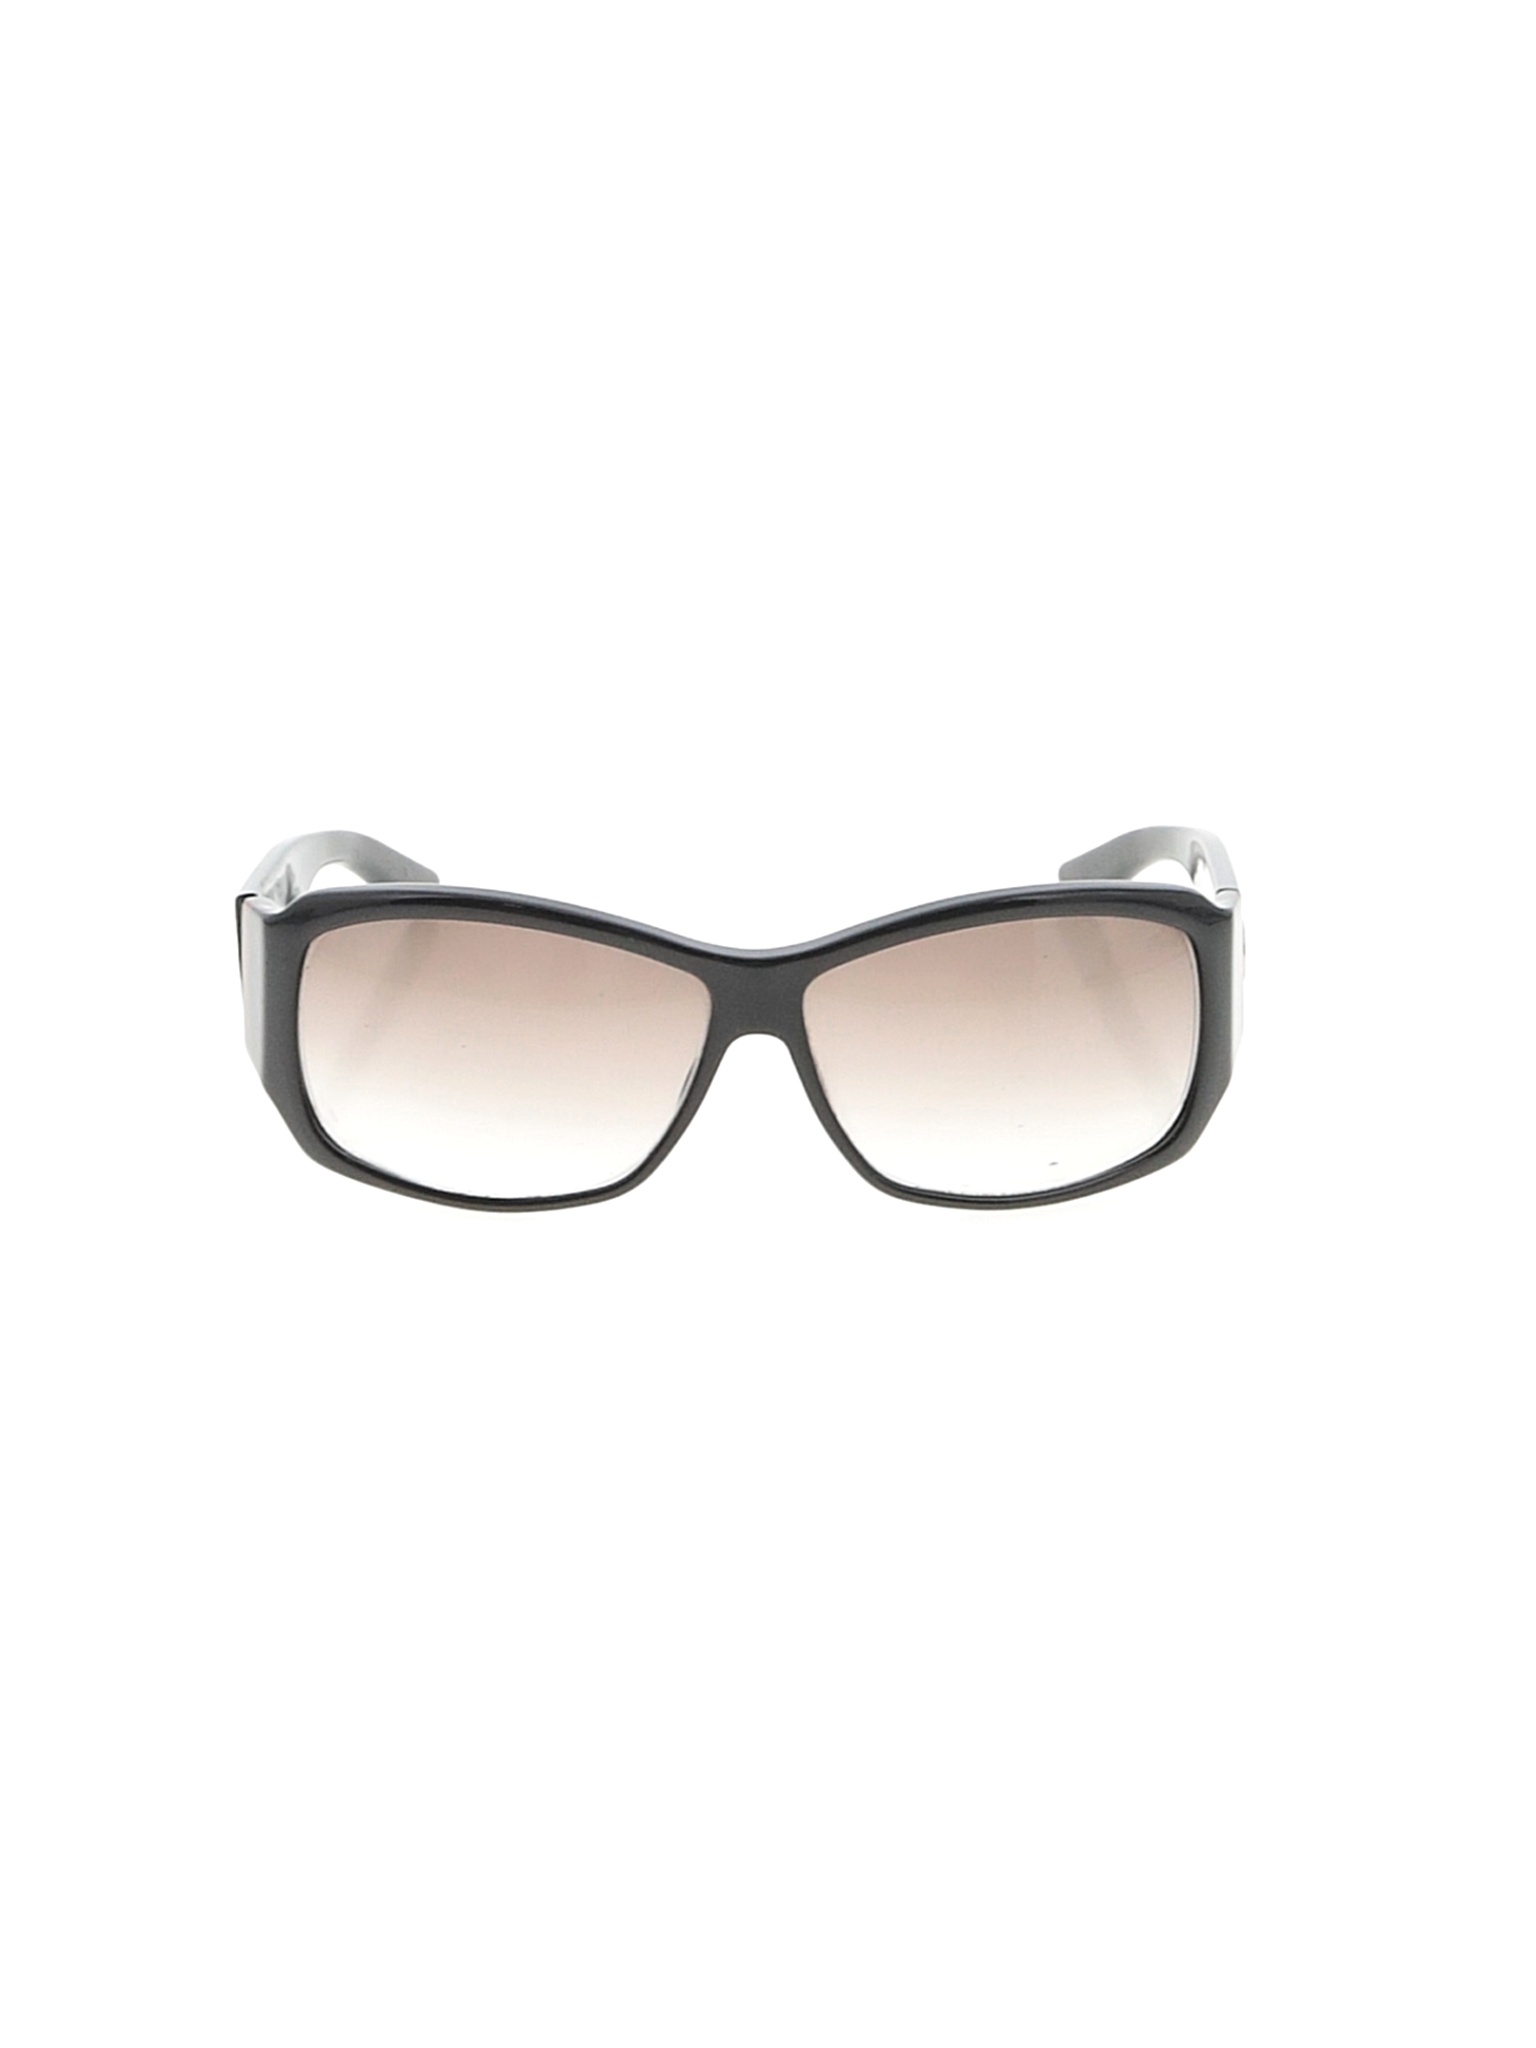 Gucci Women Black Sunglasses One Size | eBay